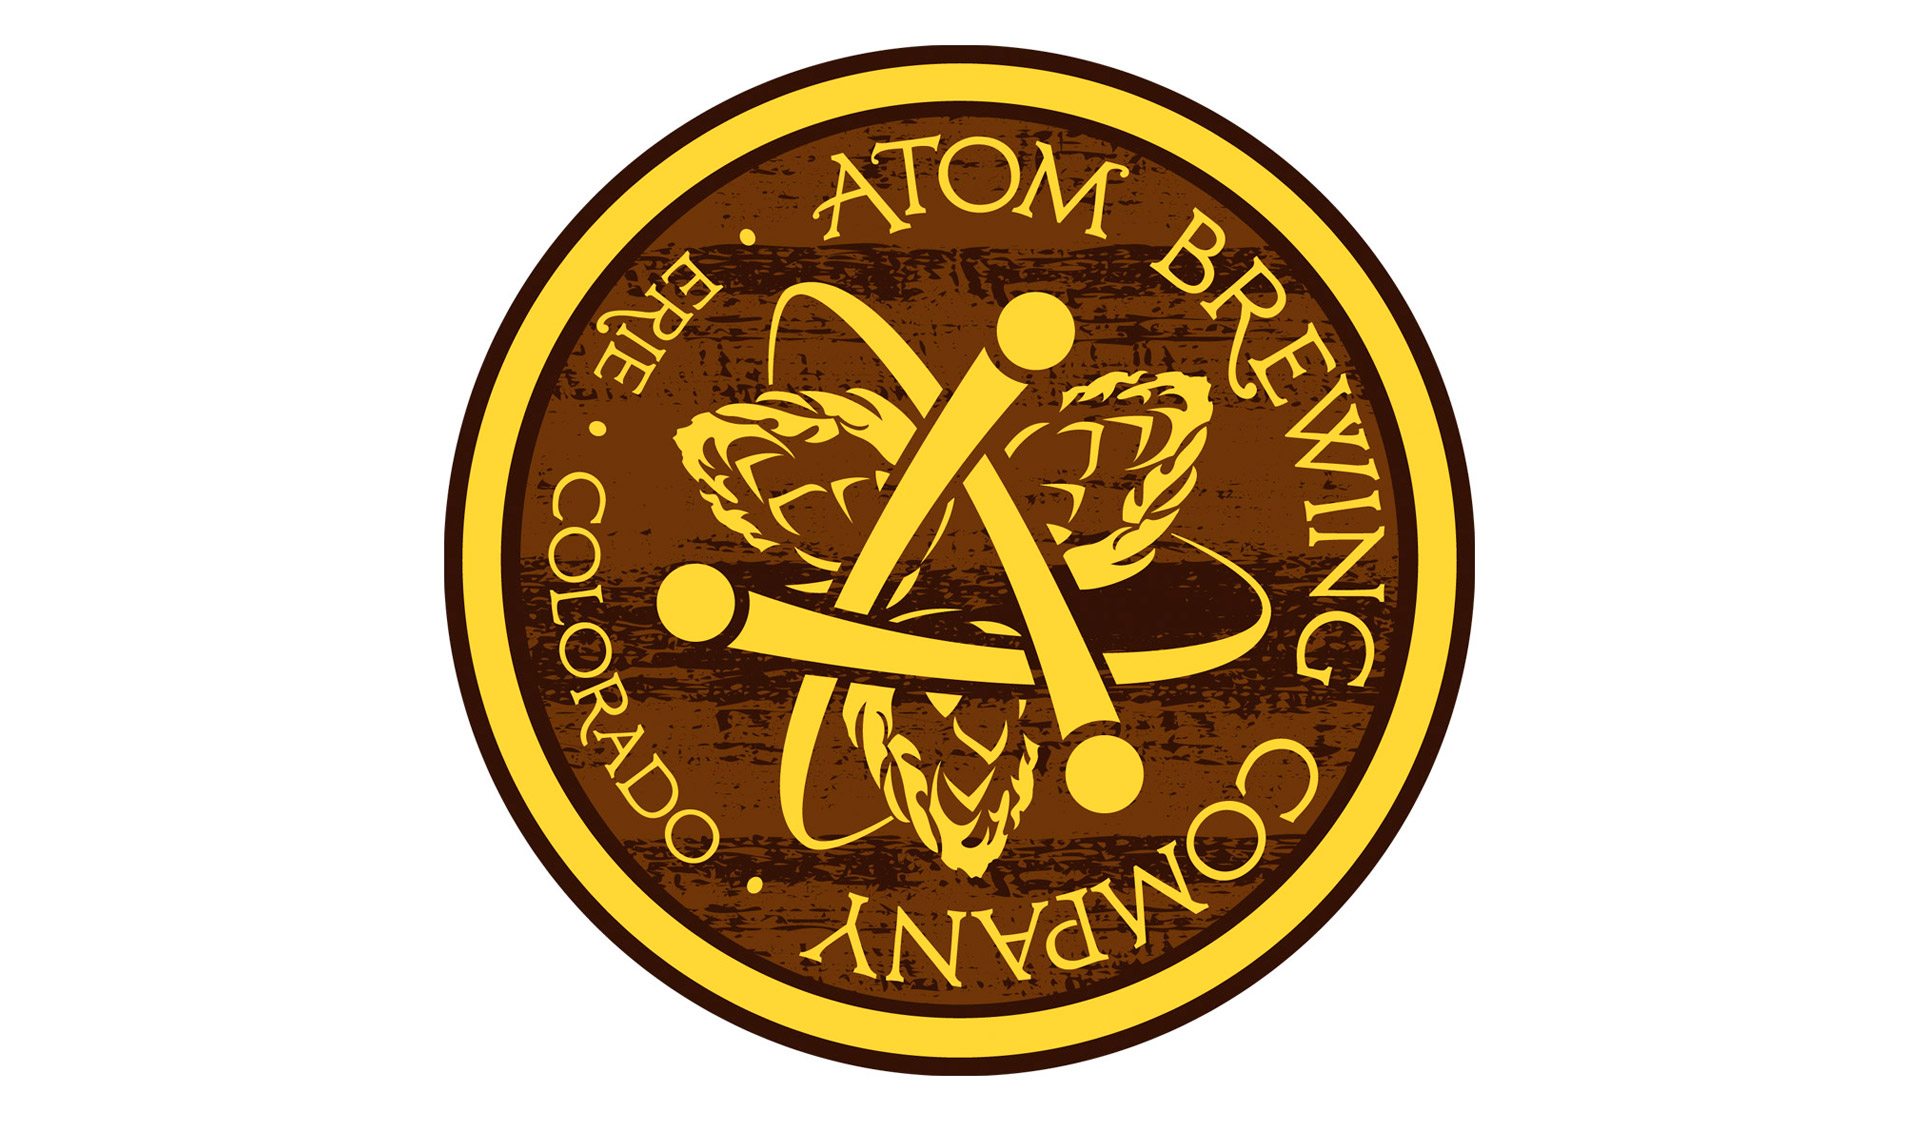 Atom-Brewing-Company-Branding-1920px